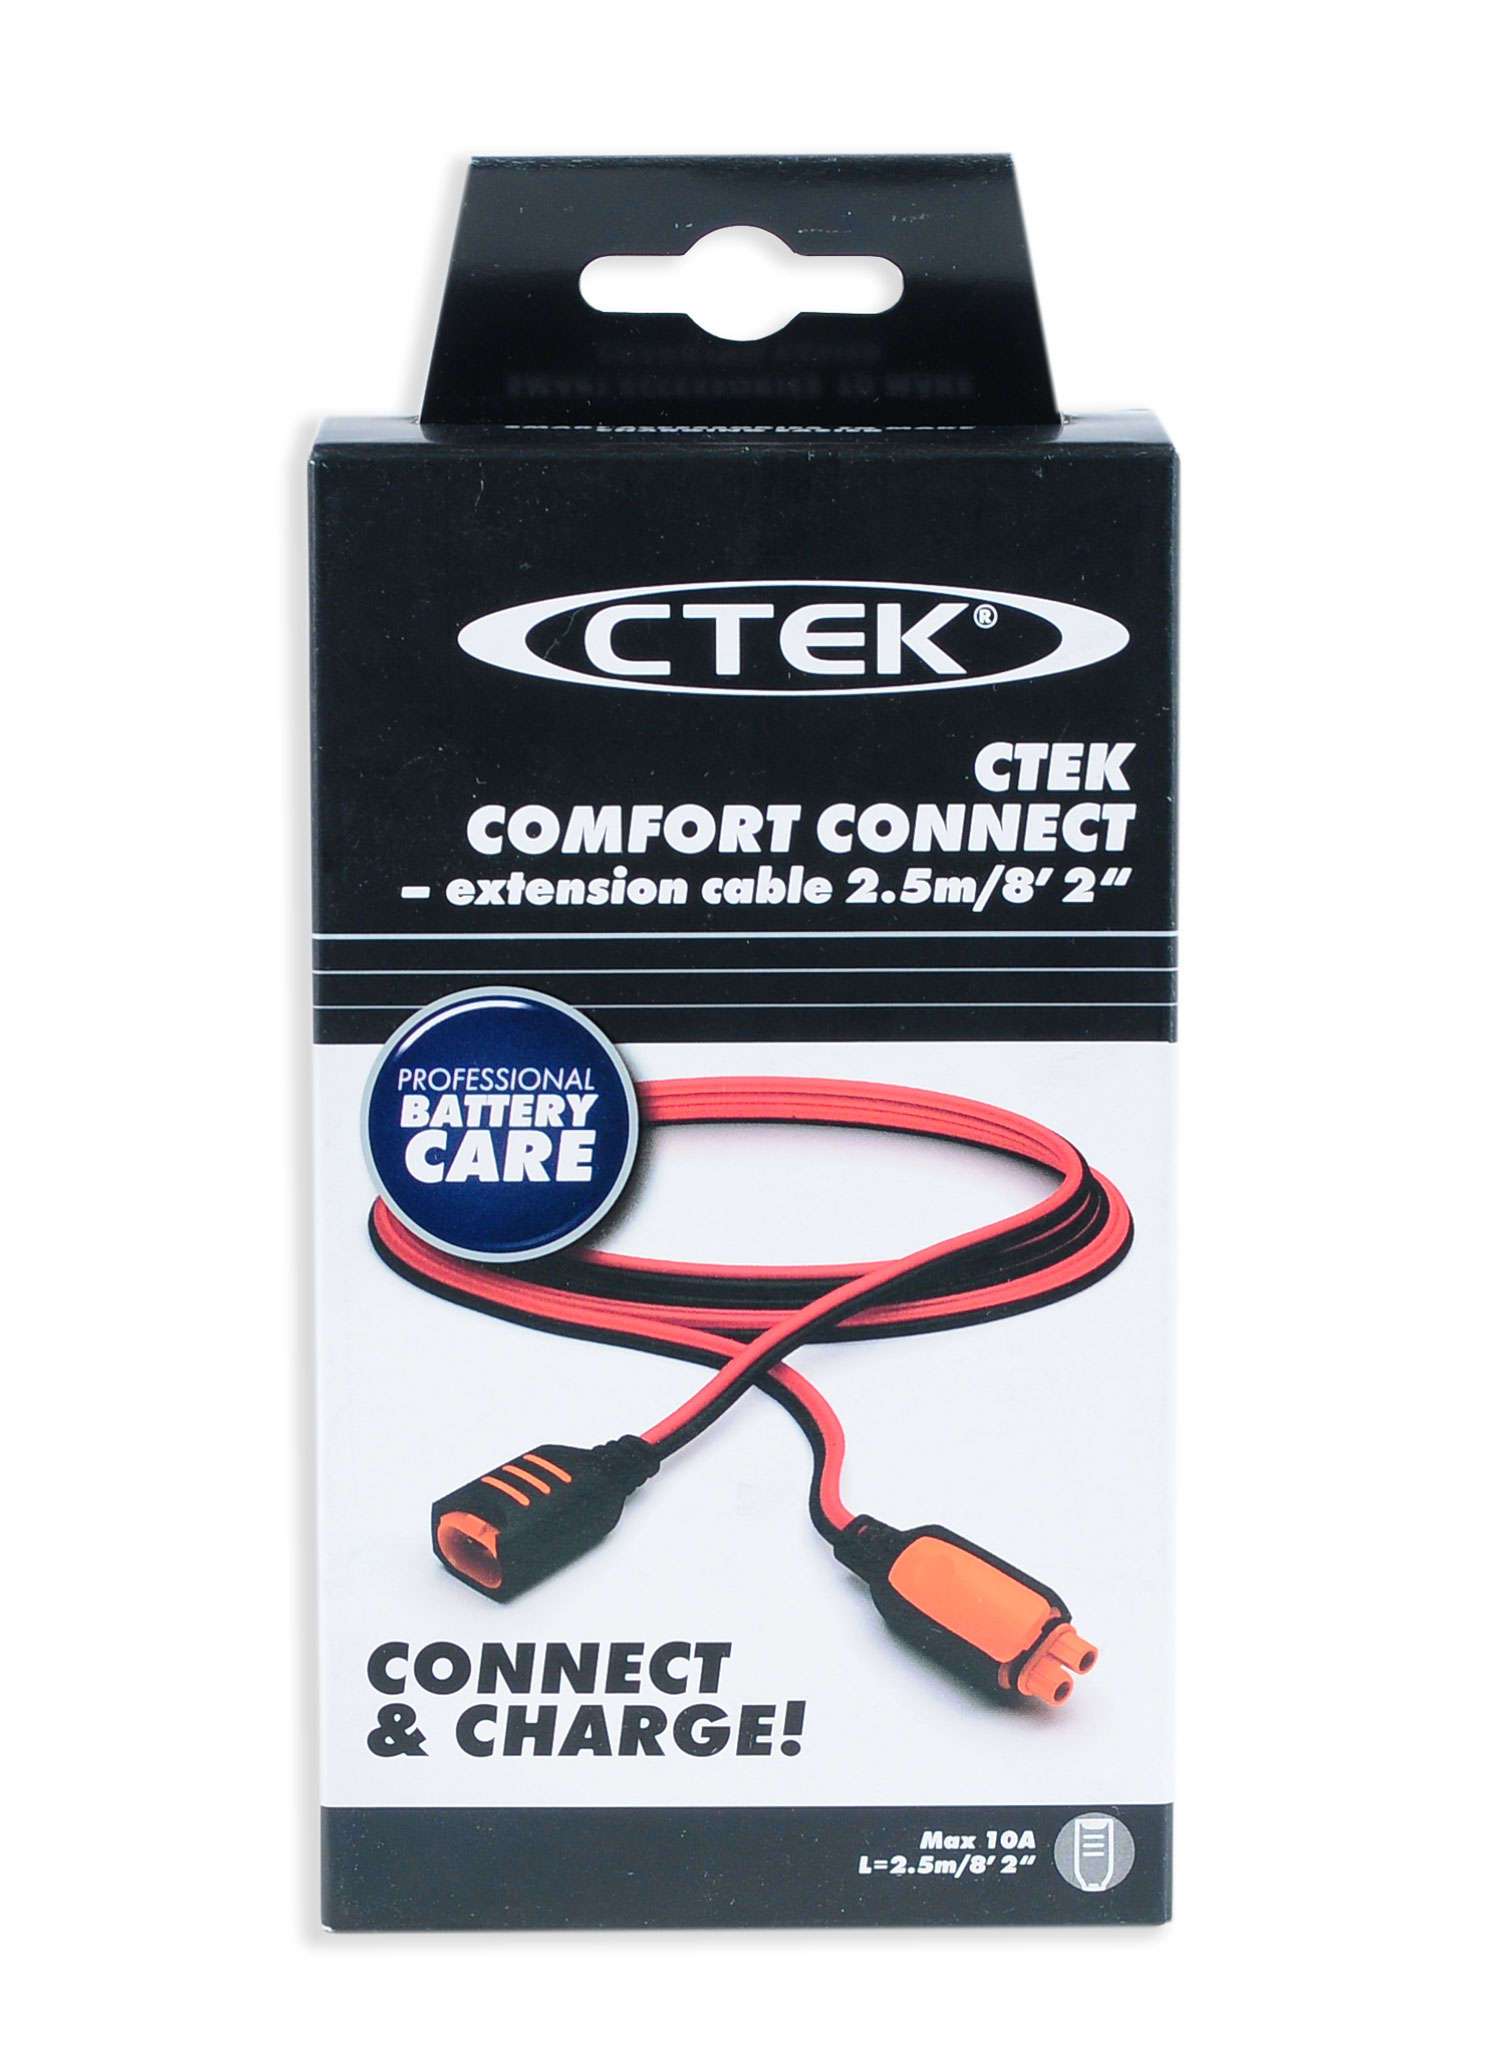 Ctek Verlängerungskabel 2,5m Comfort Connect (56-304)